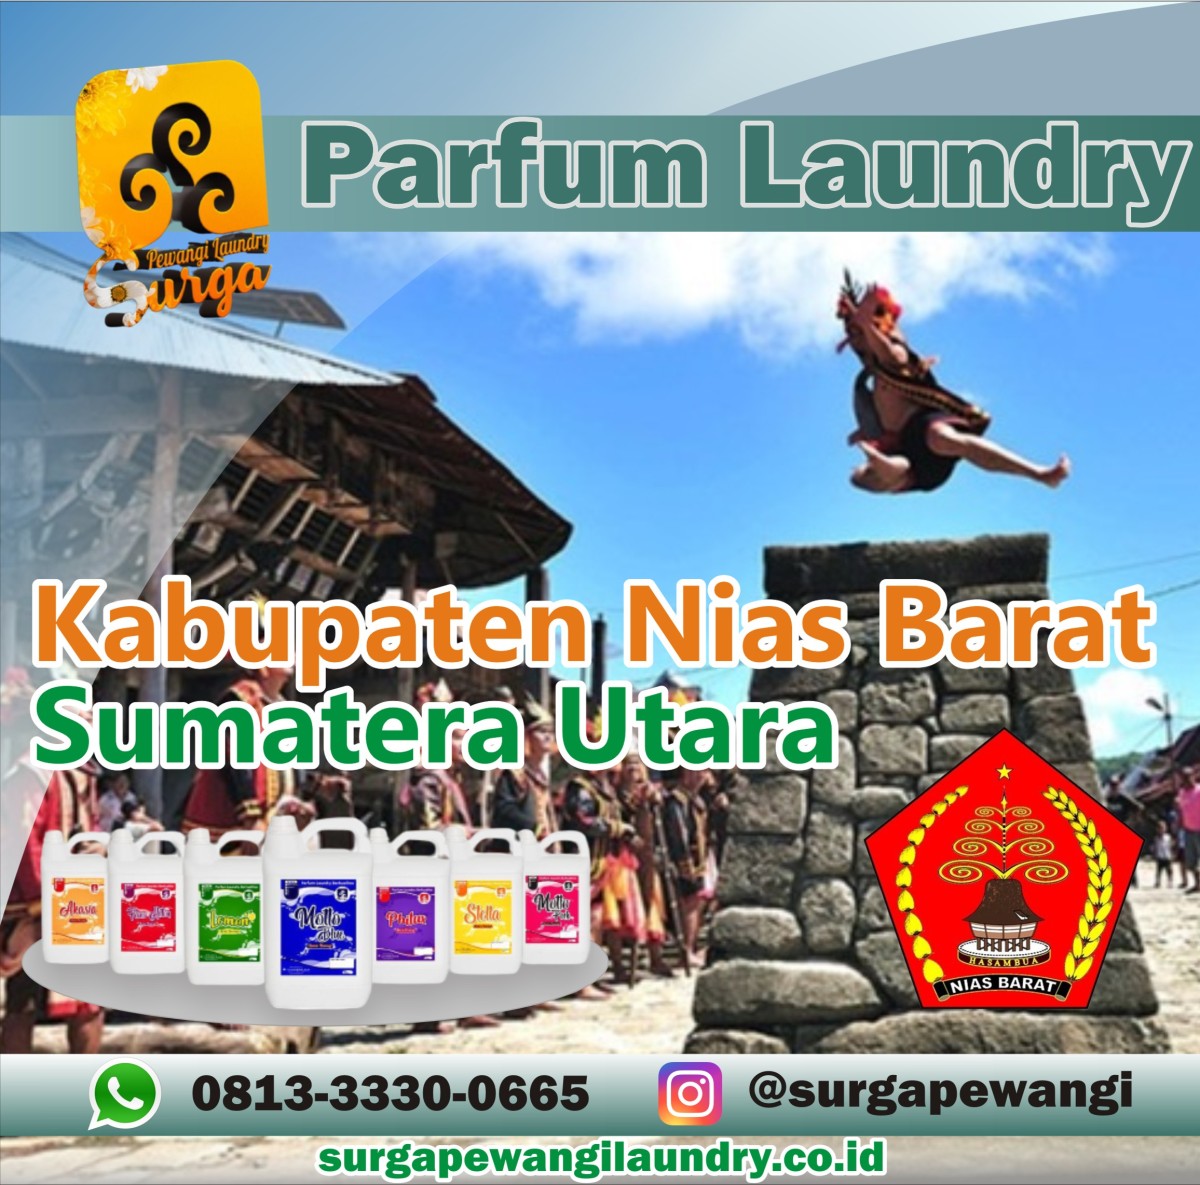 Parfum Laundry Kabupaten Nias Barat, Sumatera Utara